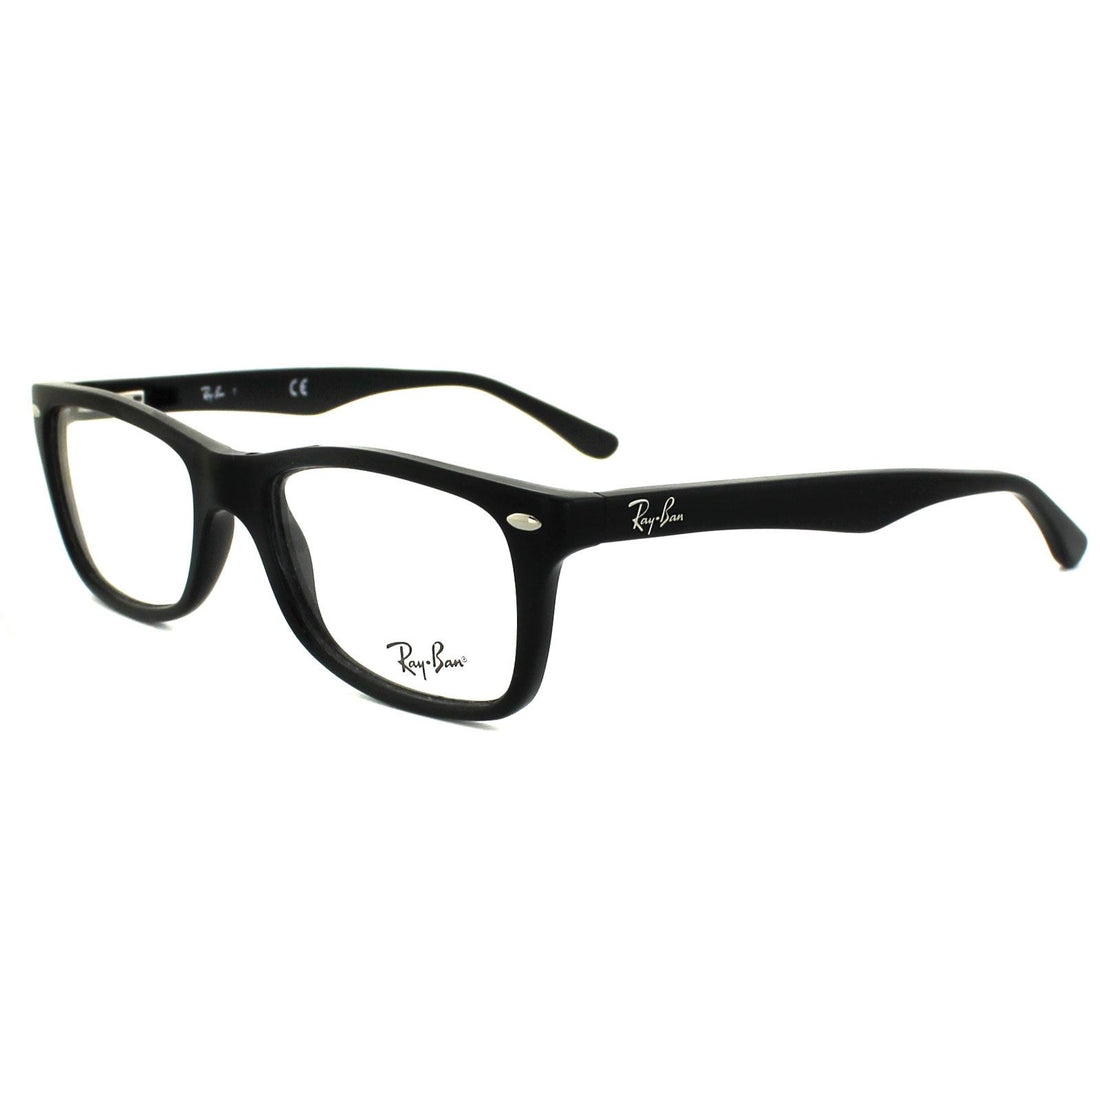 Ray-Ban Glasses Frames 5228 2000 Black 55mm